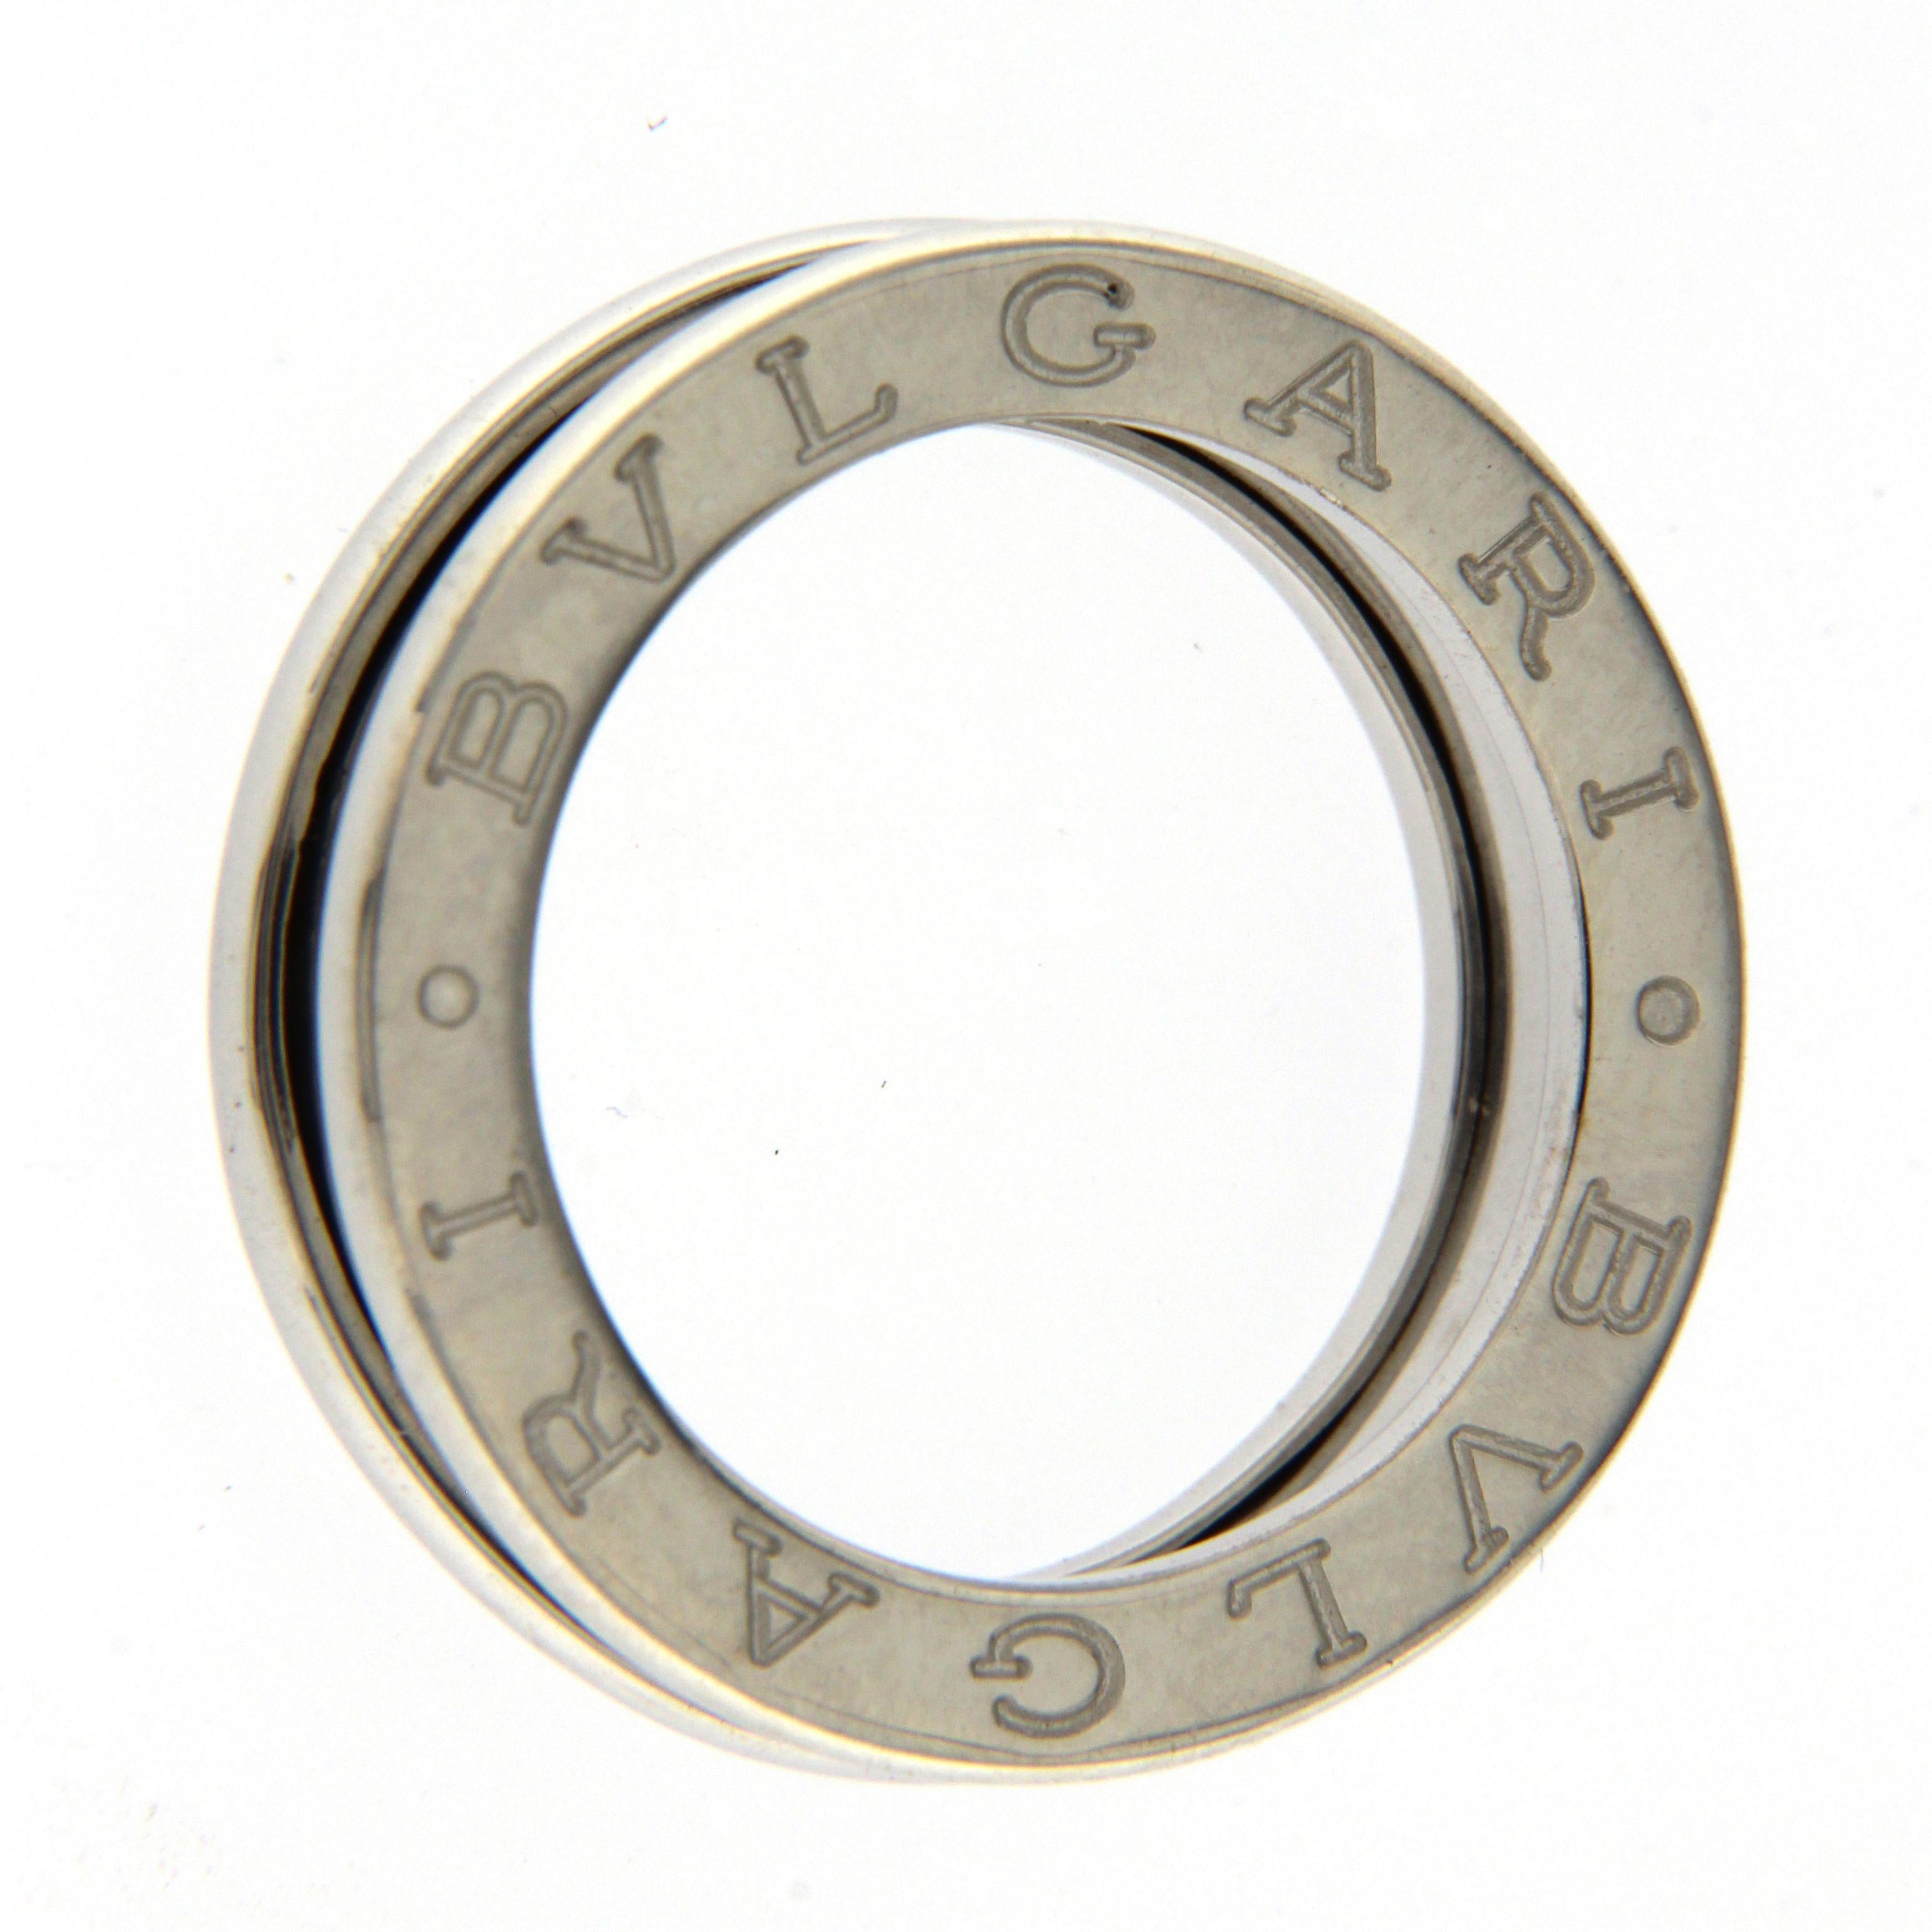 BZERO1 ring 18kt white gold       size 47        1 Band